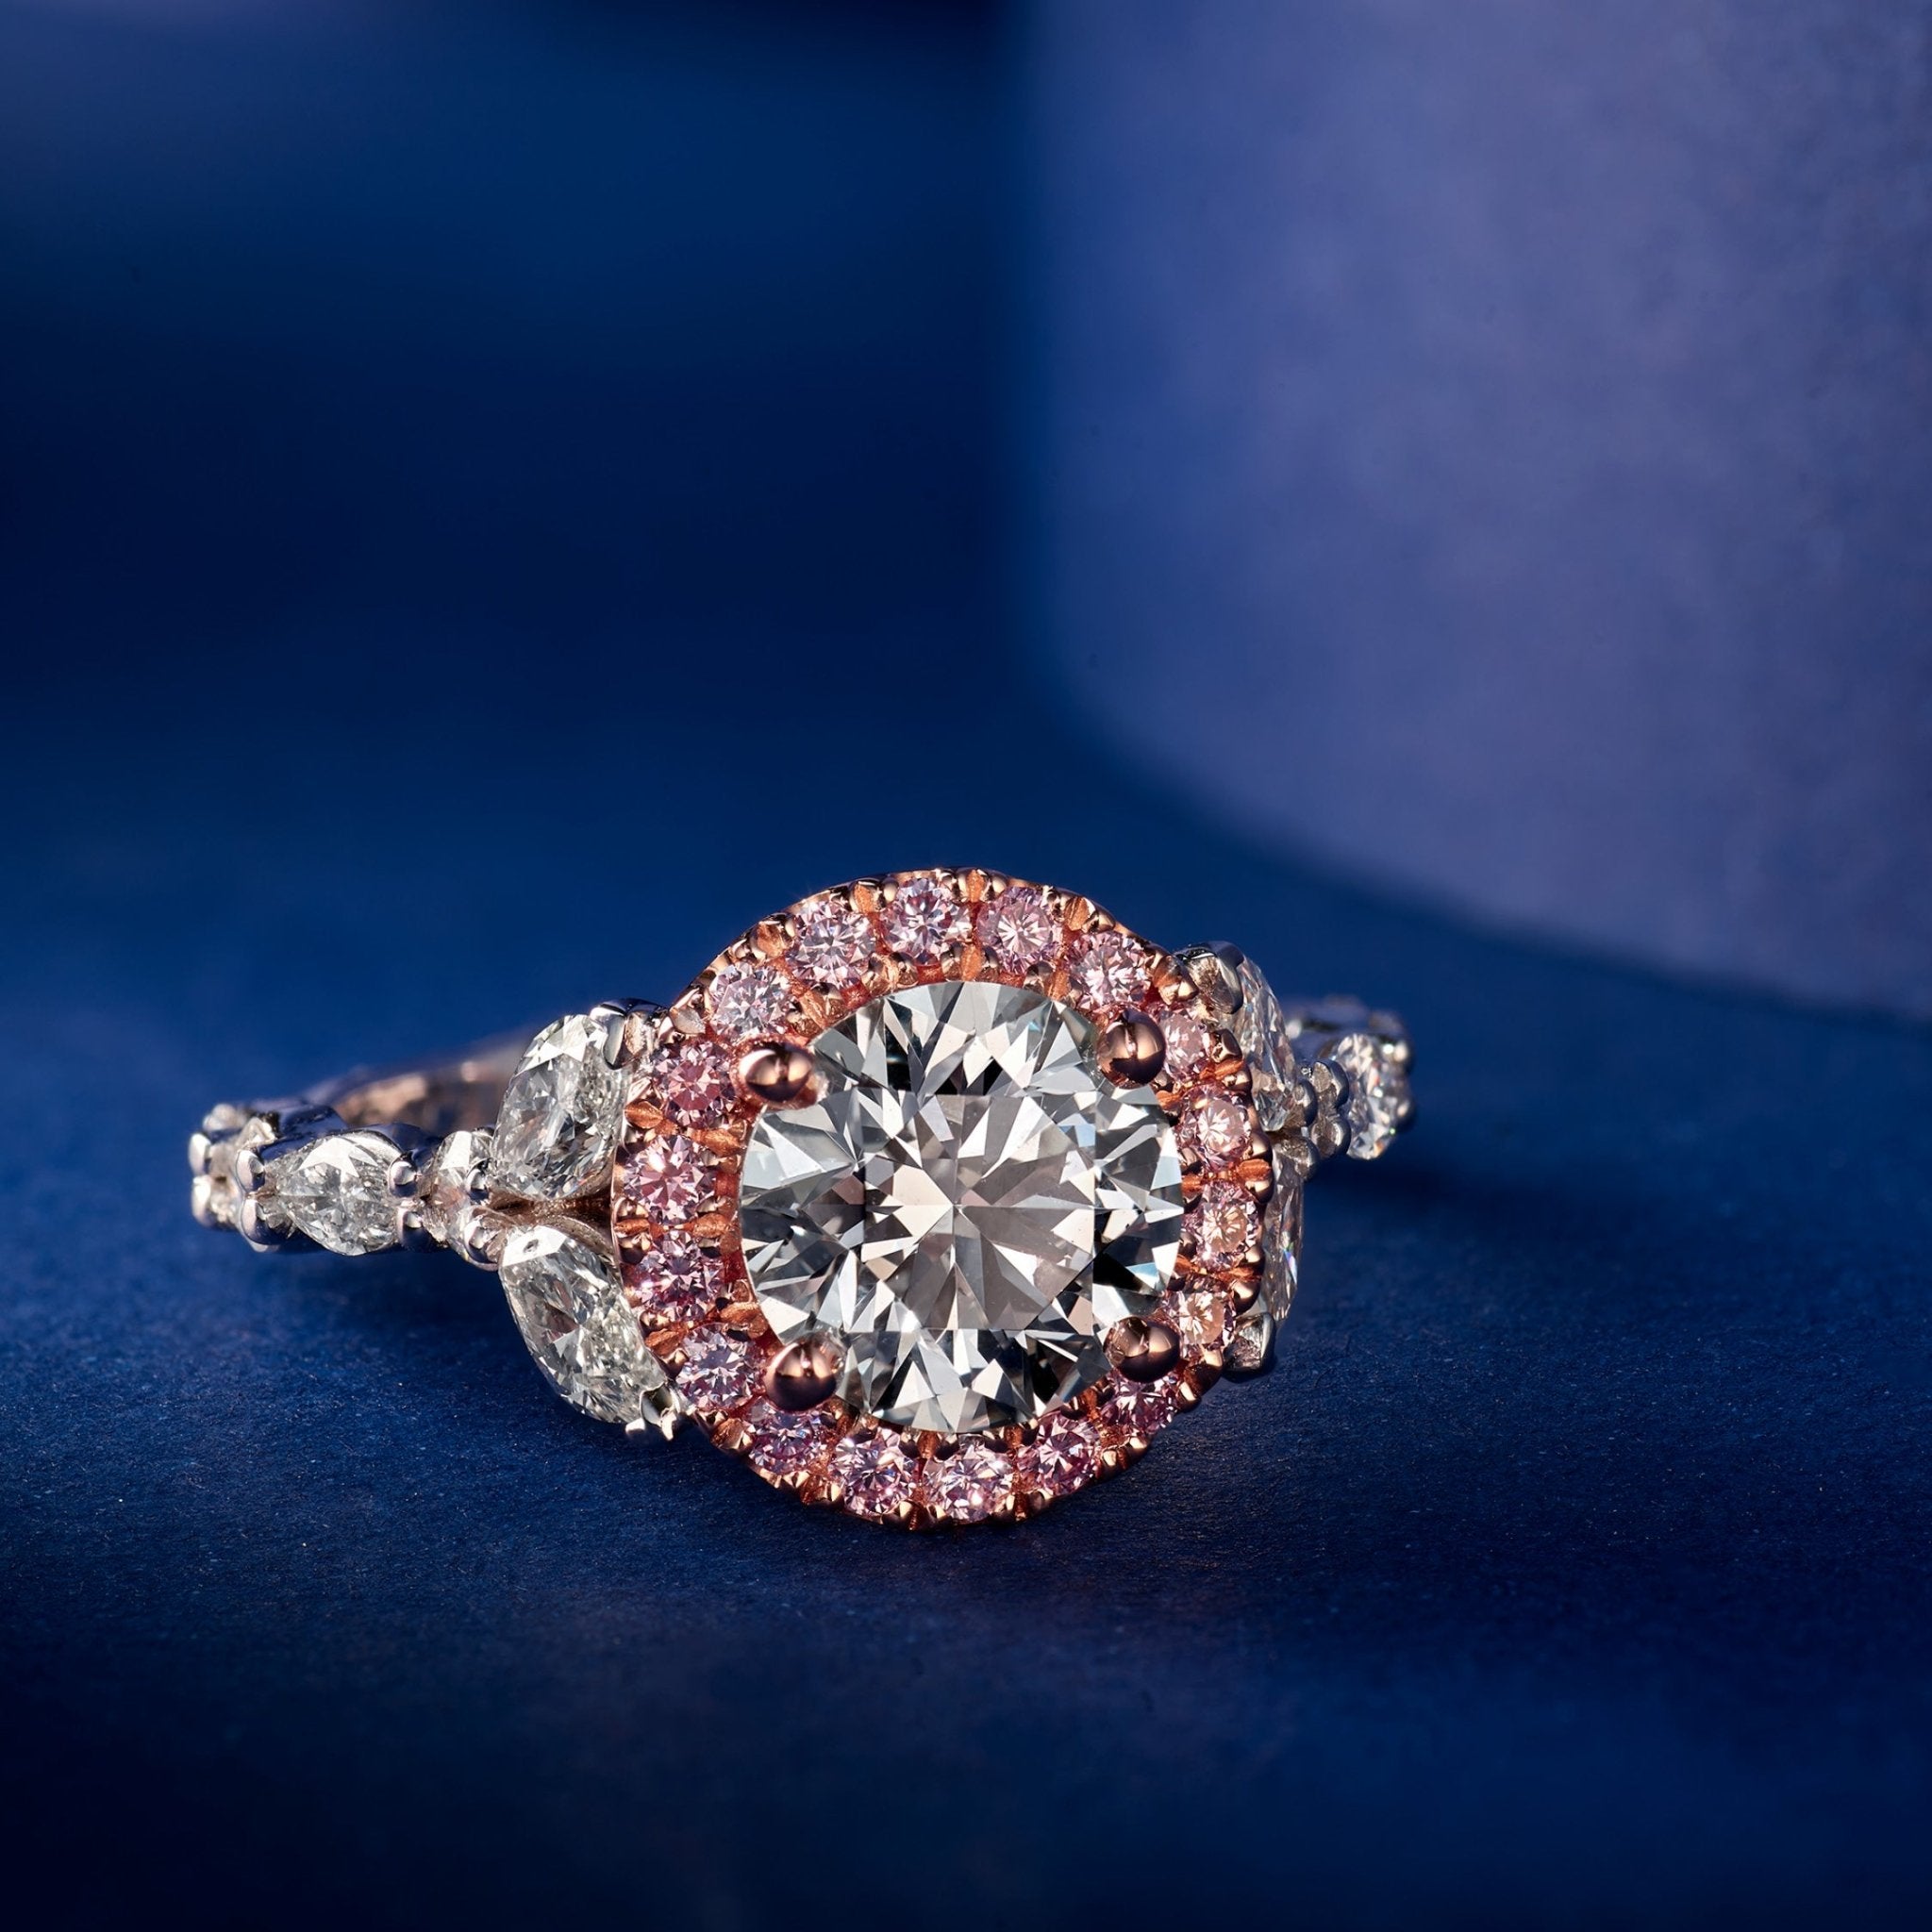 Argyle Pink & White Diamond Ring - Dracakis Jewellers